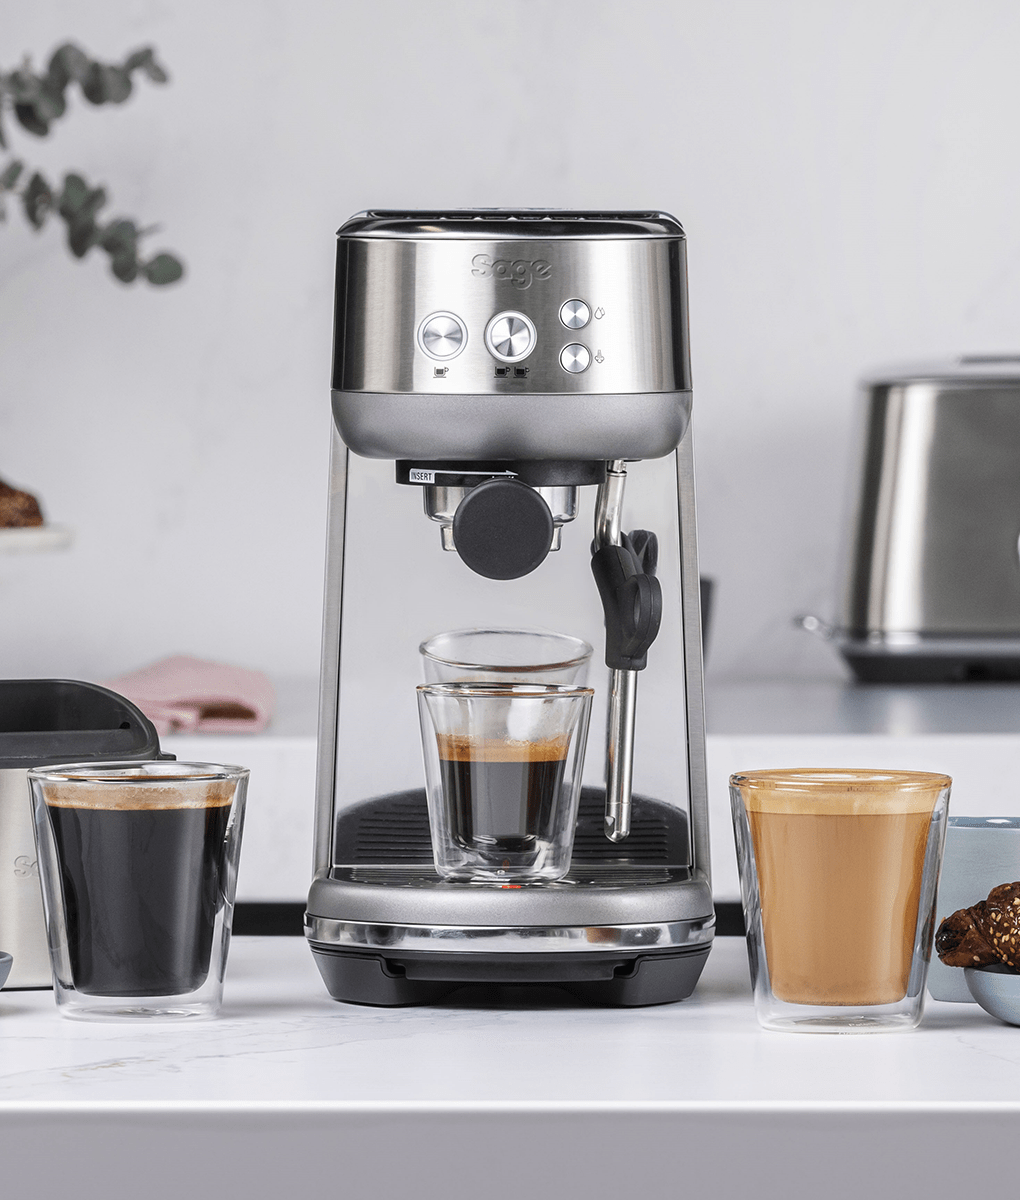 Win a Sage espresso machine and Roastworks coffee